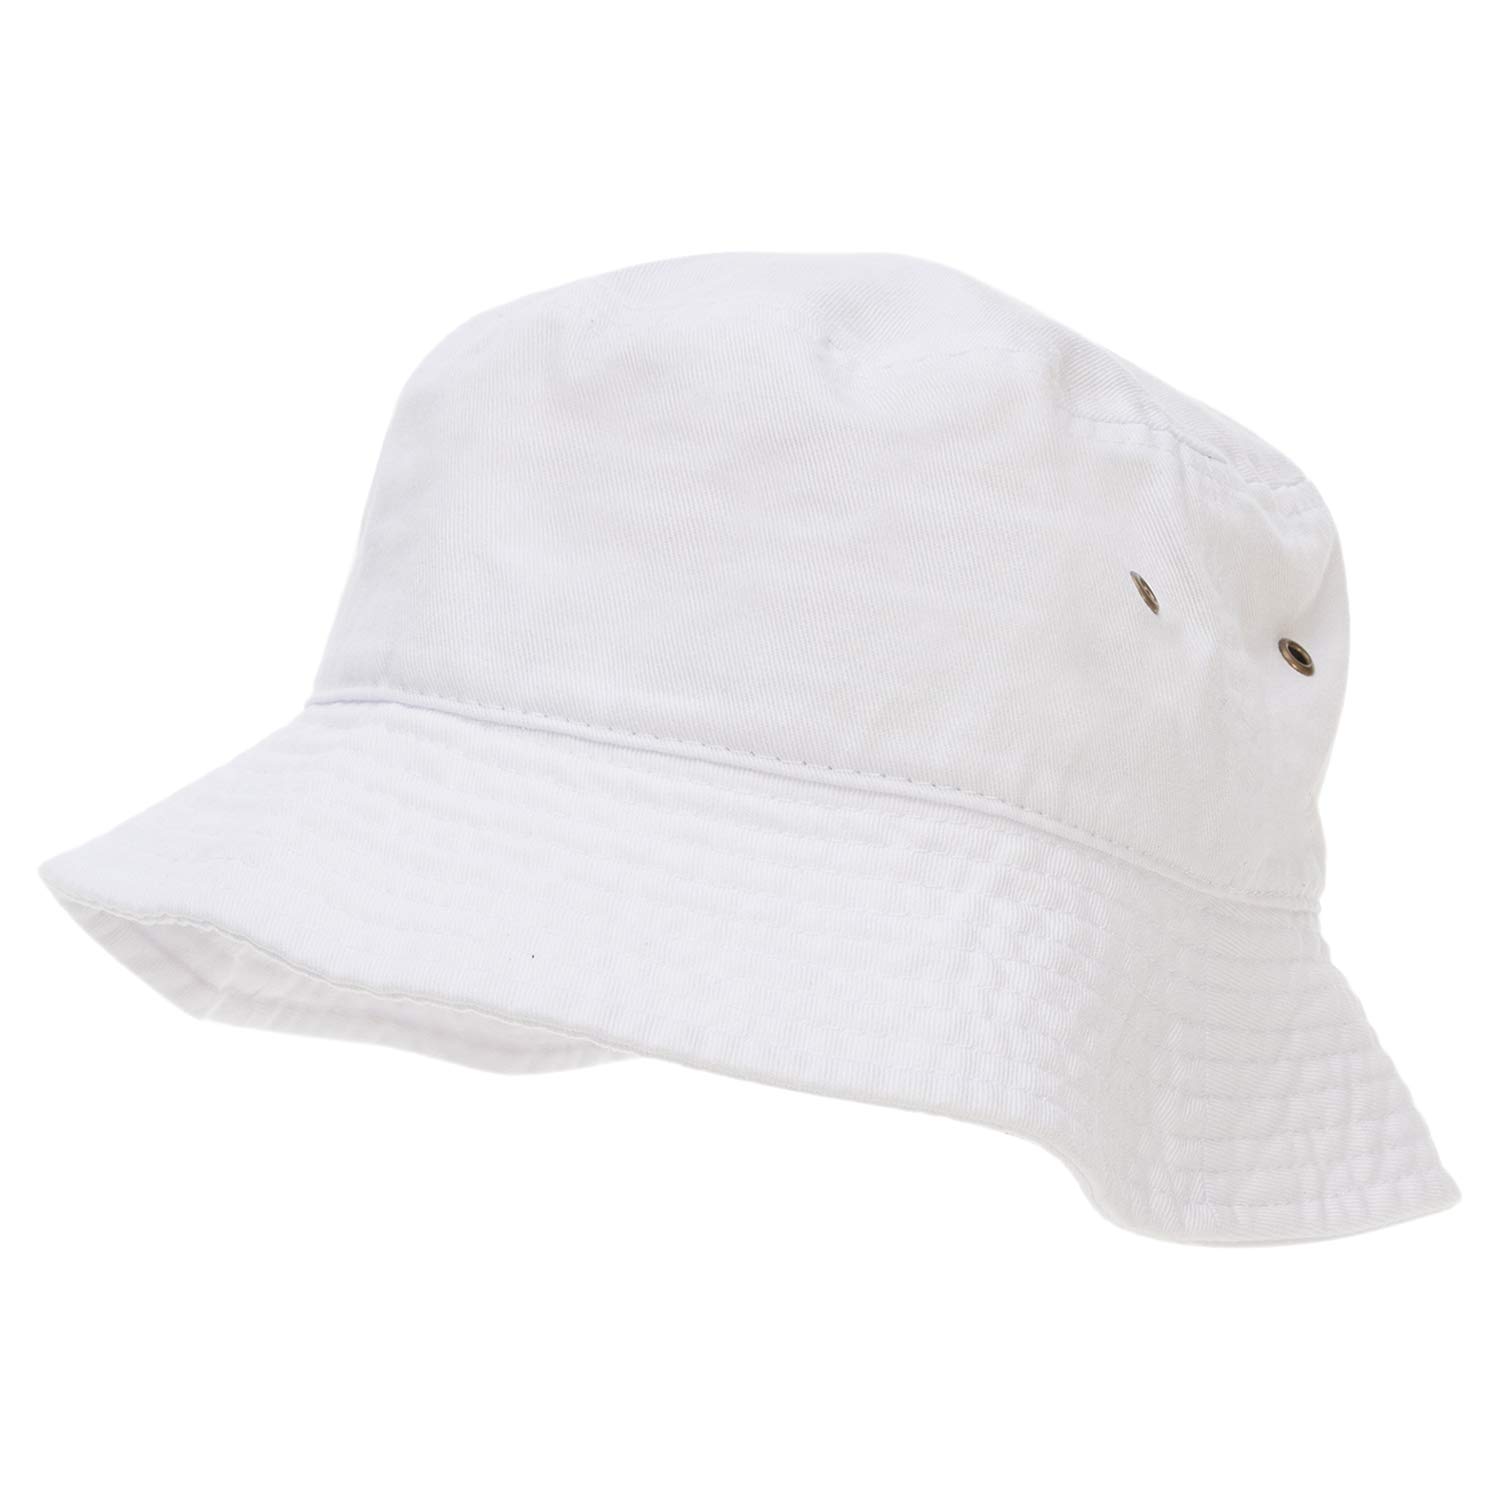 Bandana.com 100% Cotton Bucket Hat for Men, Women, Kids - Summer Cap  Fishing Hat Large